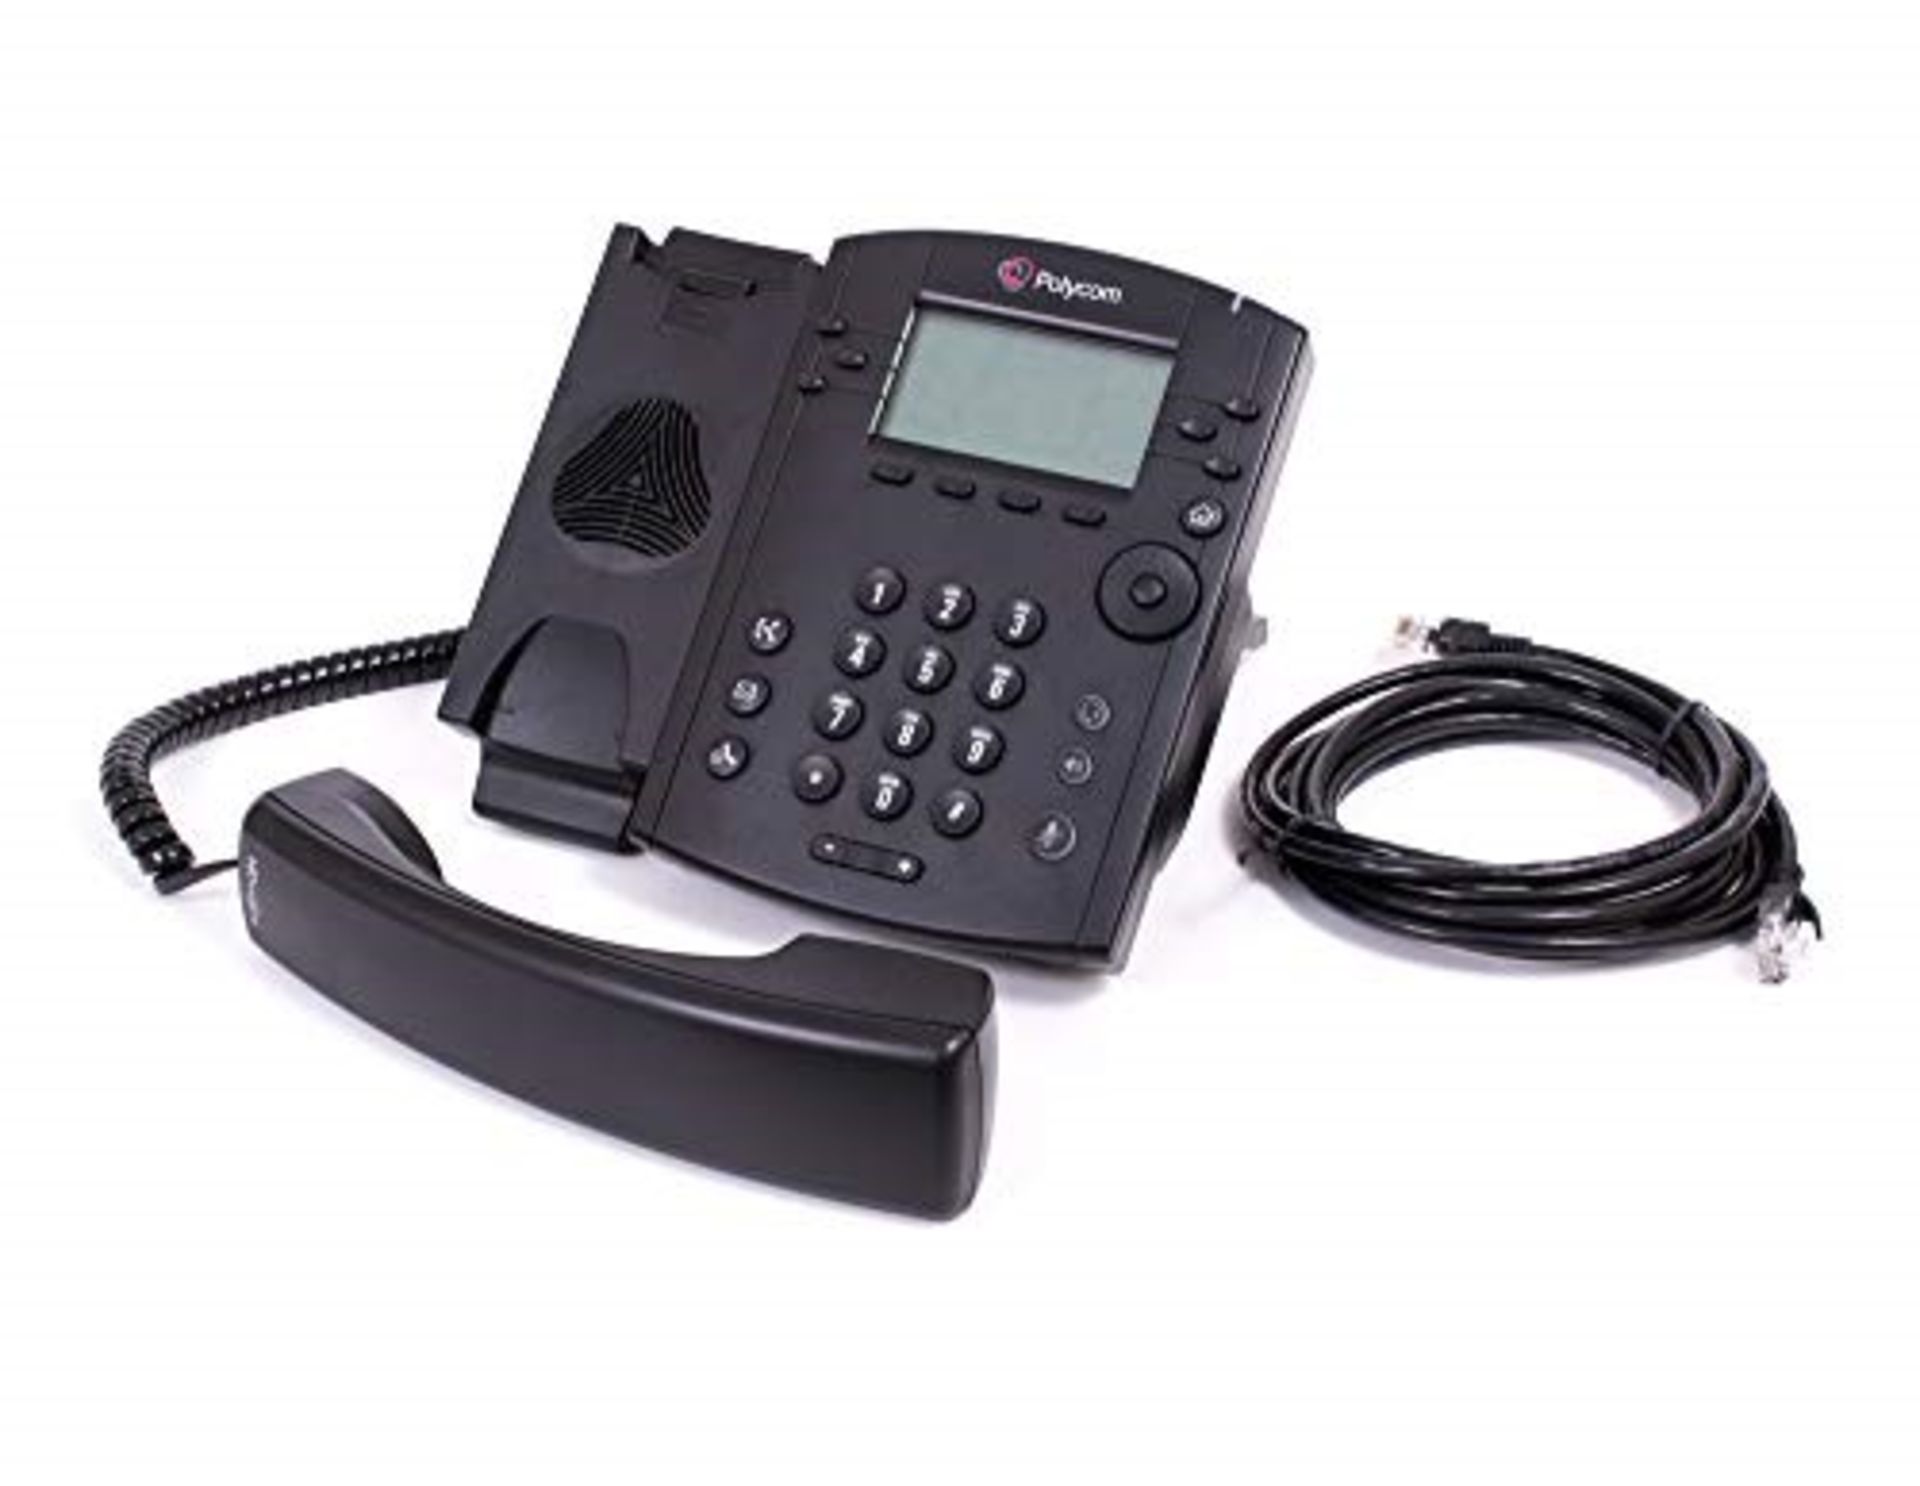 Polycom 2200-46135-025 VoIP VVX300 Desk Phone - Black(Renewed)